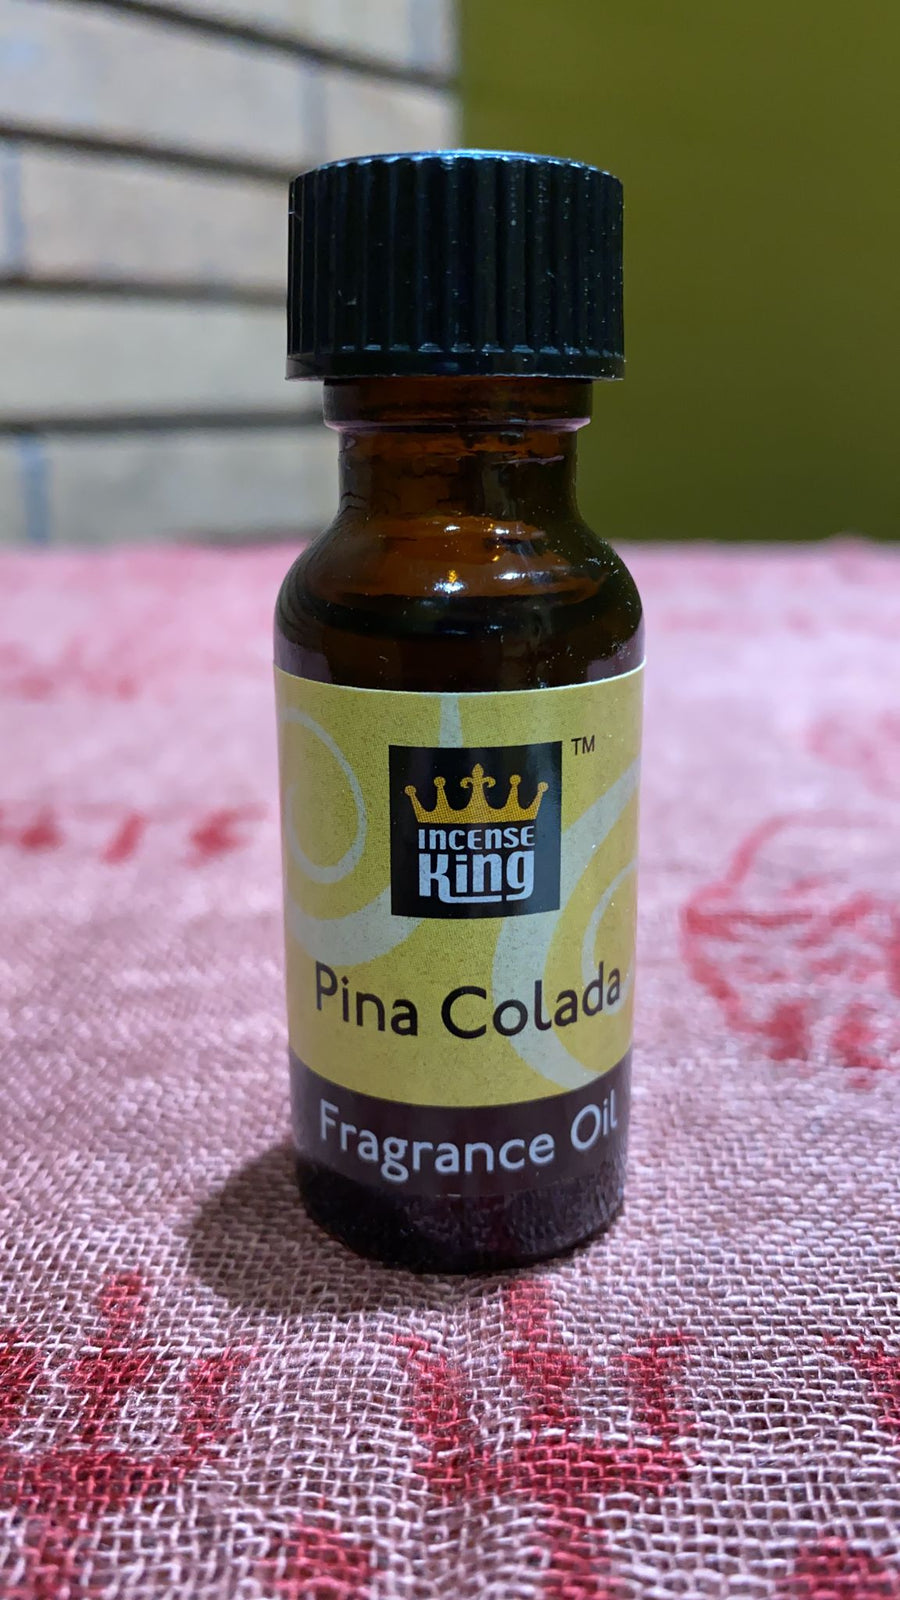 pina colada fragrance oil